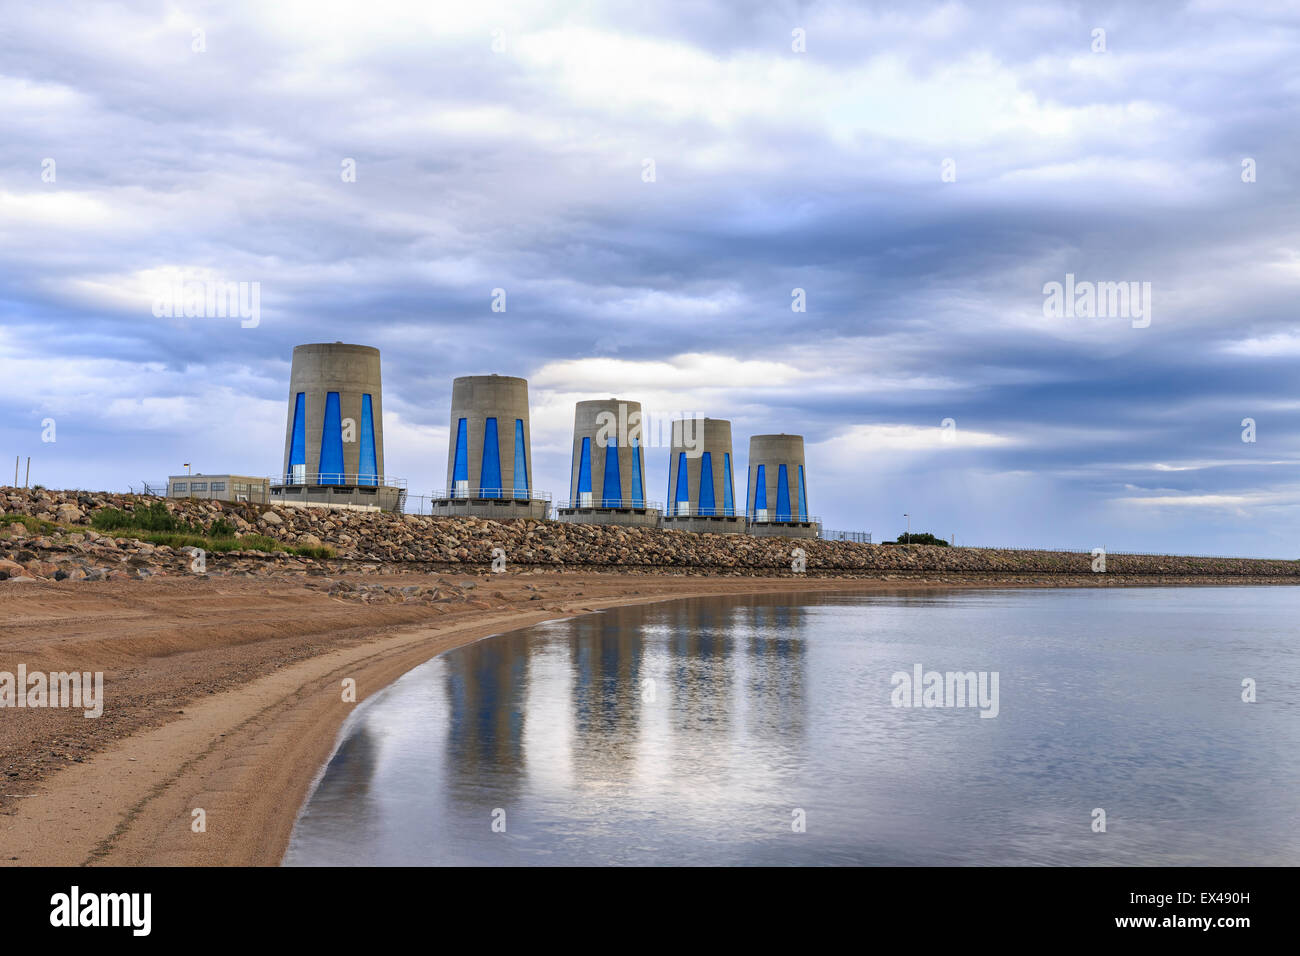 Hydroelectric power turbines at Gardiner Dam on Lake Diefenbaker, Saskatchewan, Canada. Stock Photo